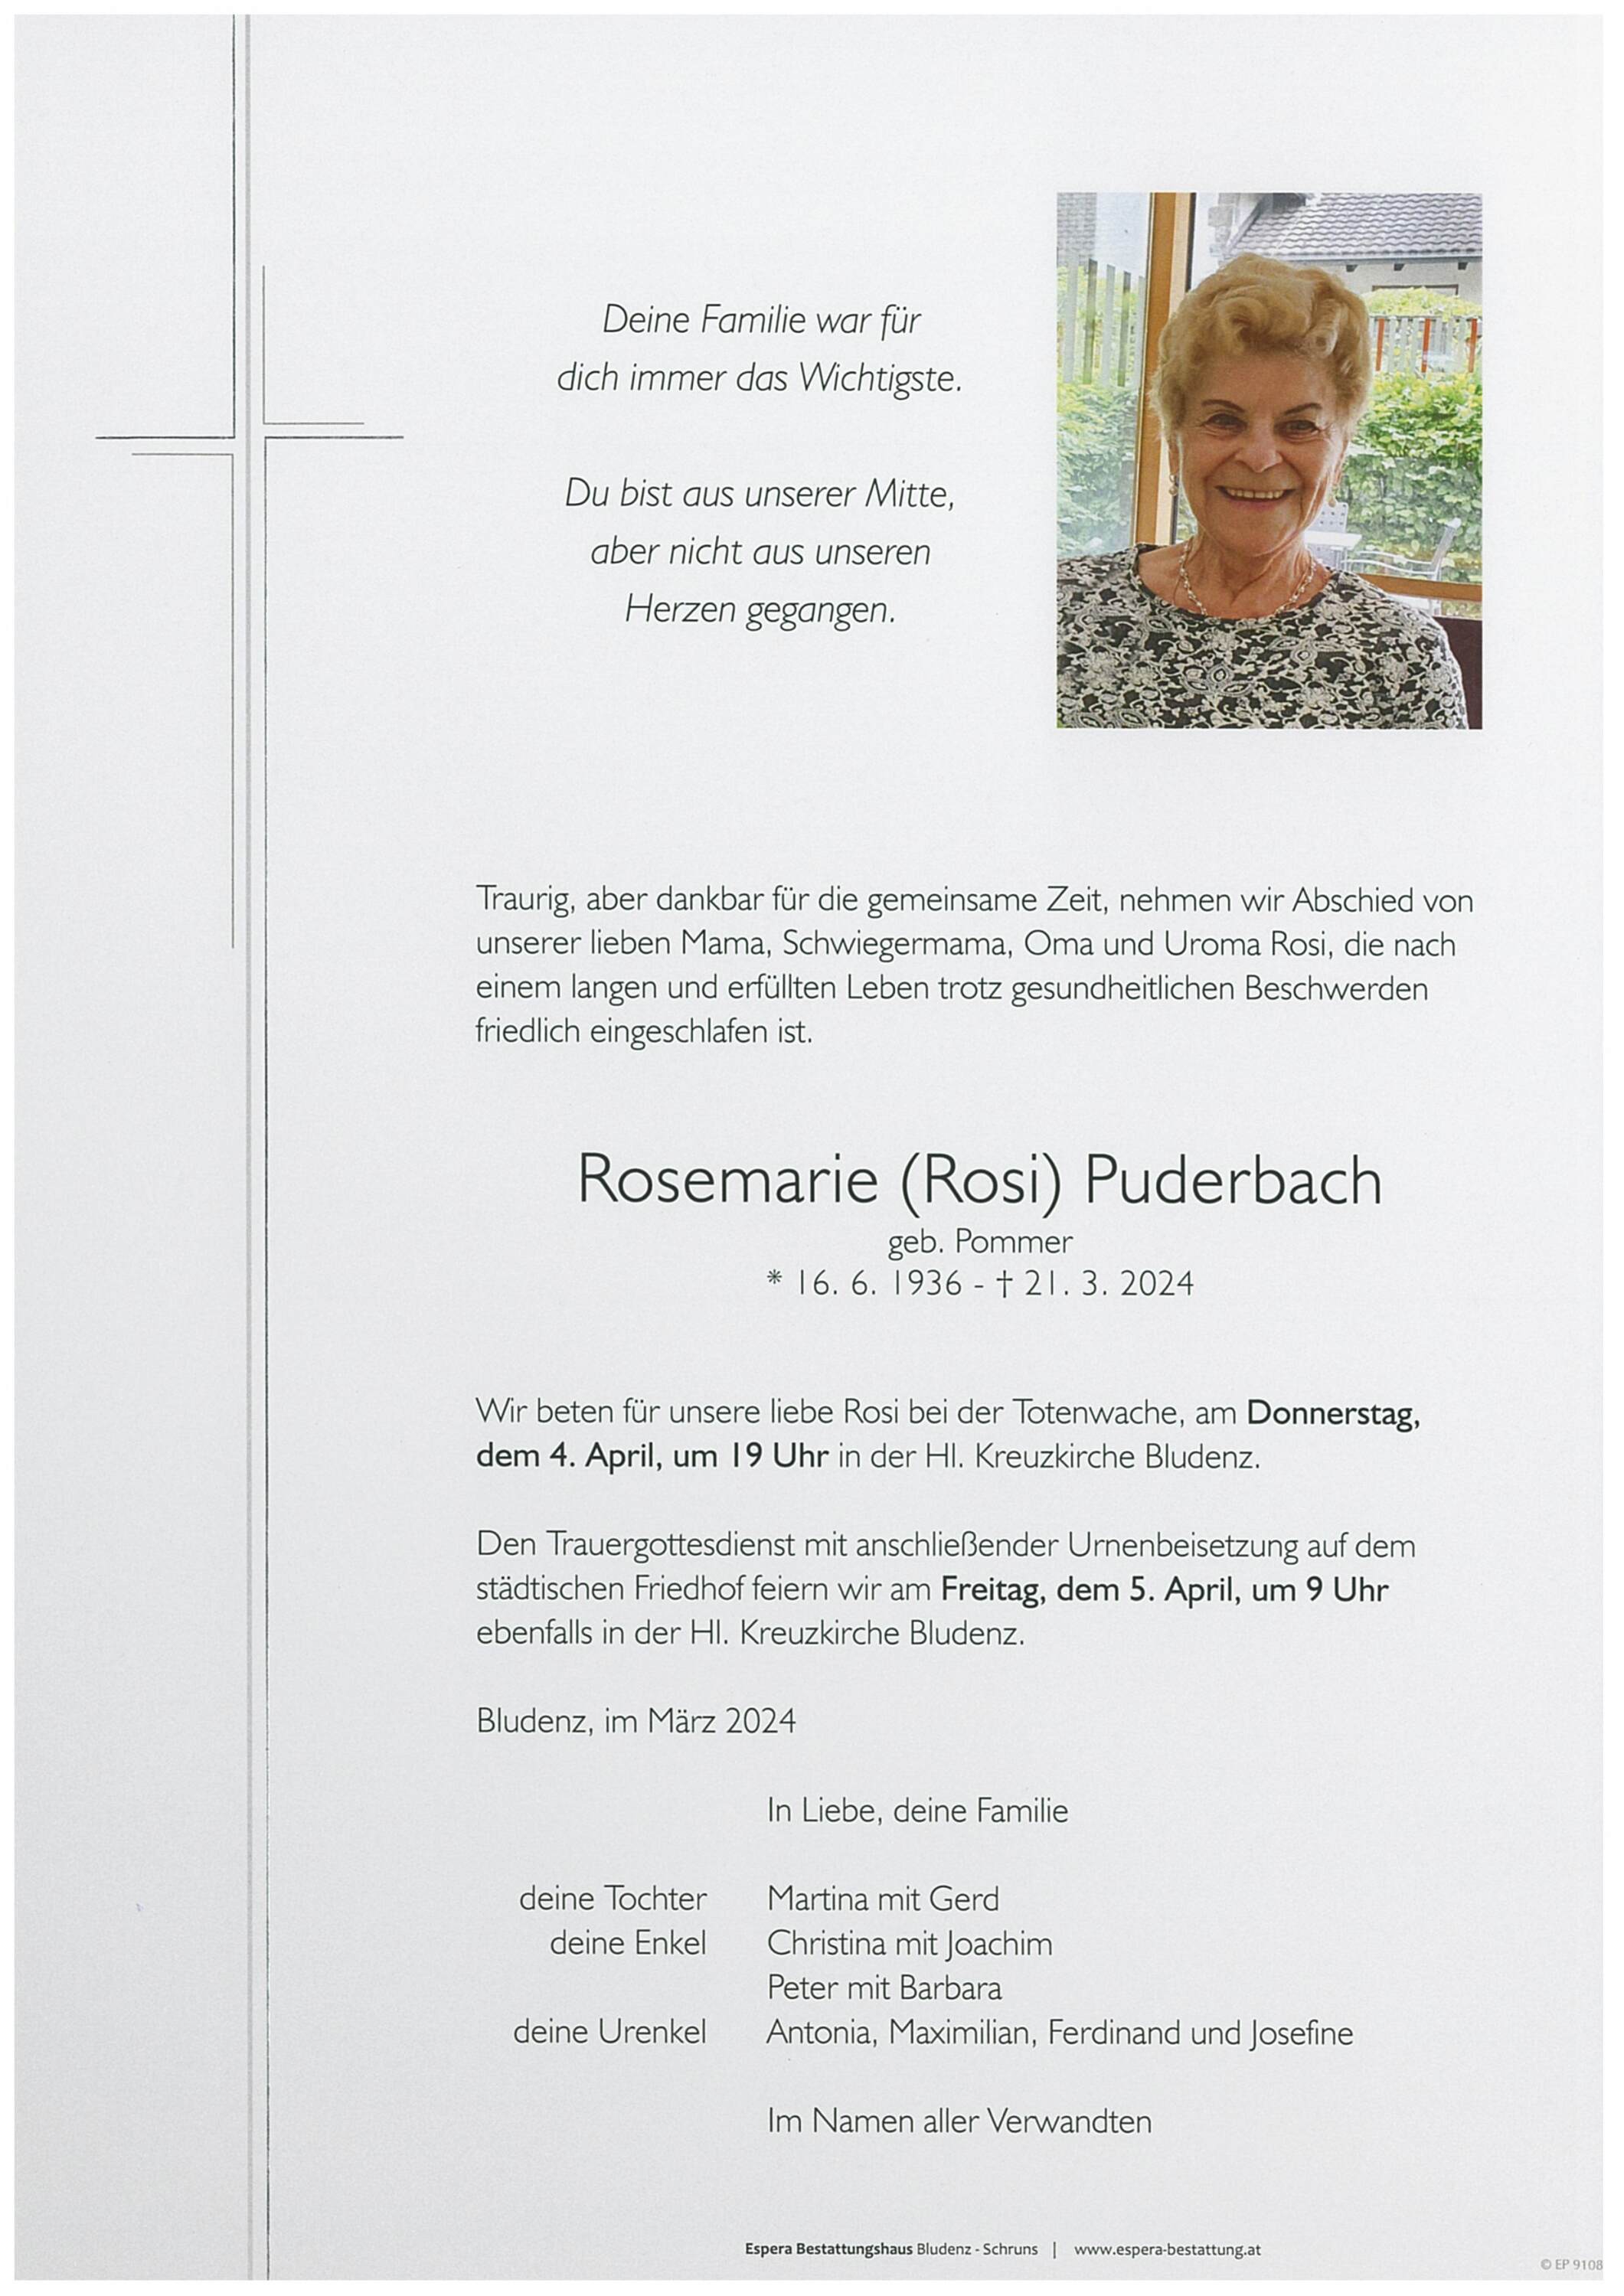 Rosemarie (Rosi) Puderbach